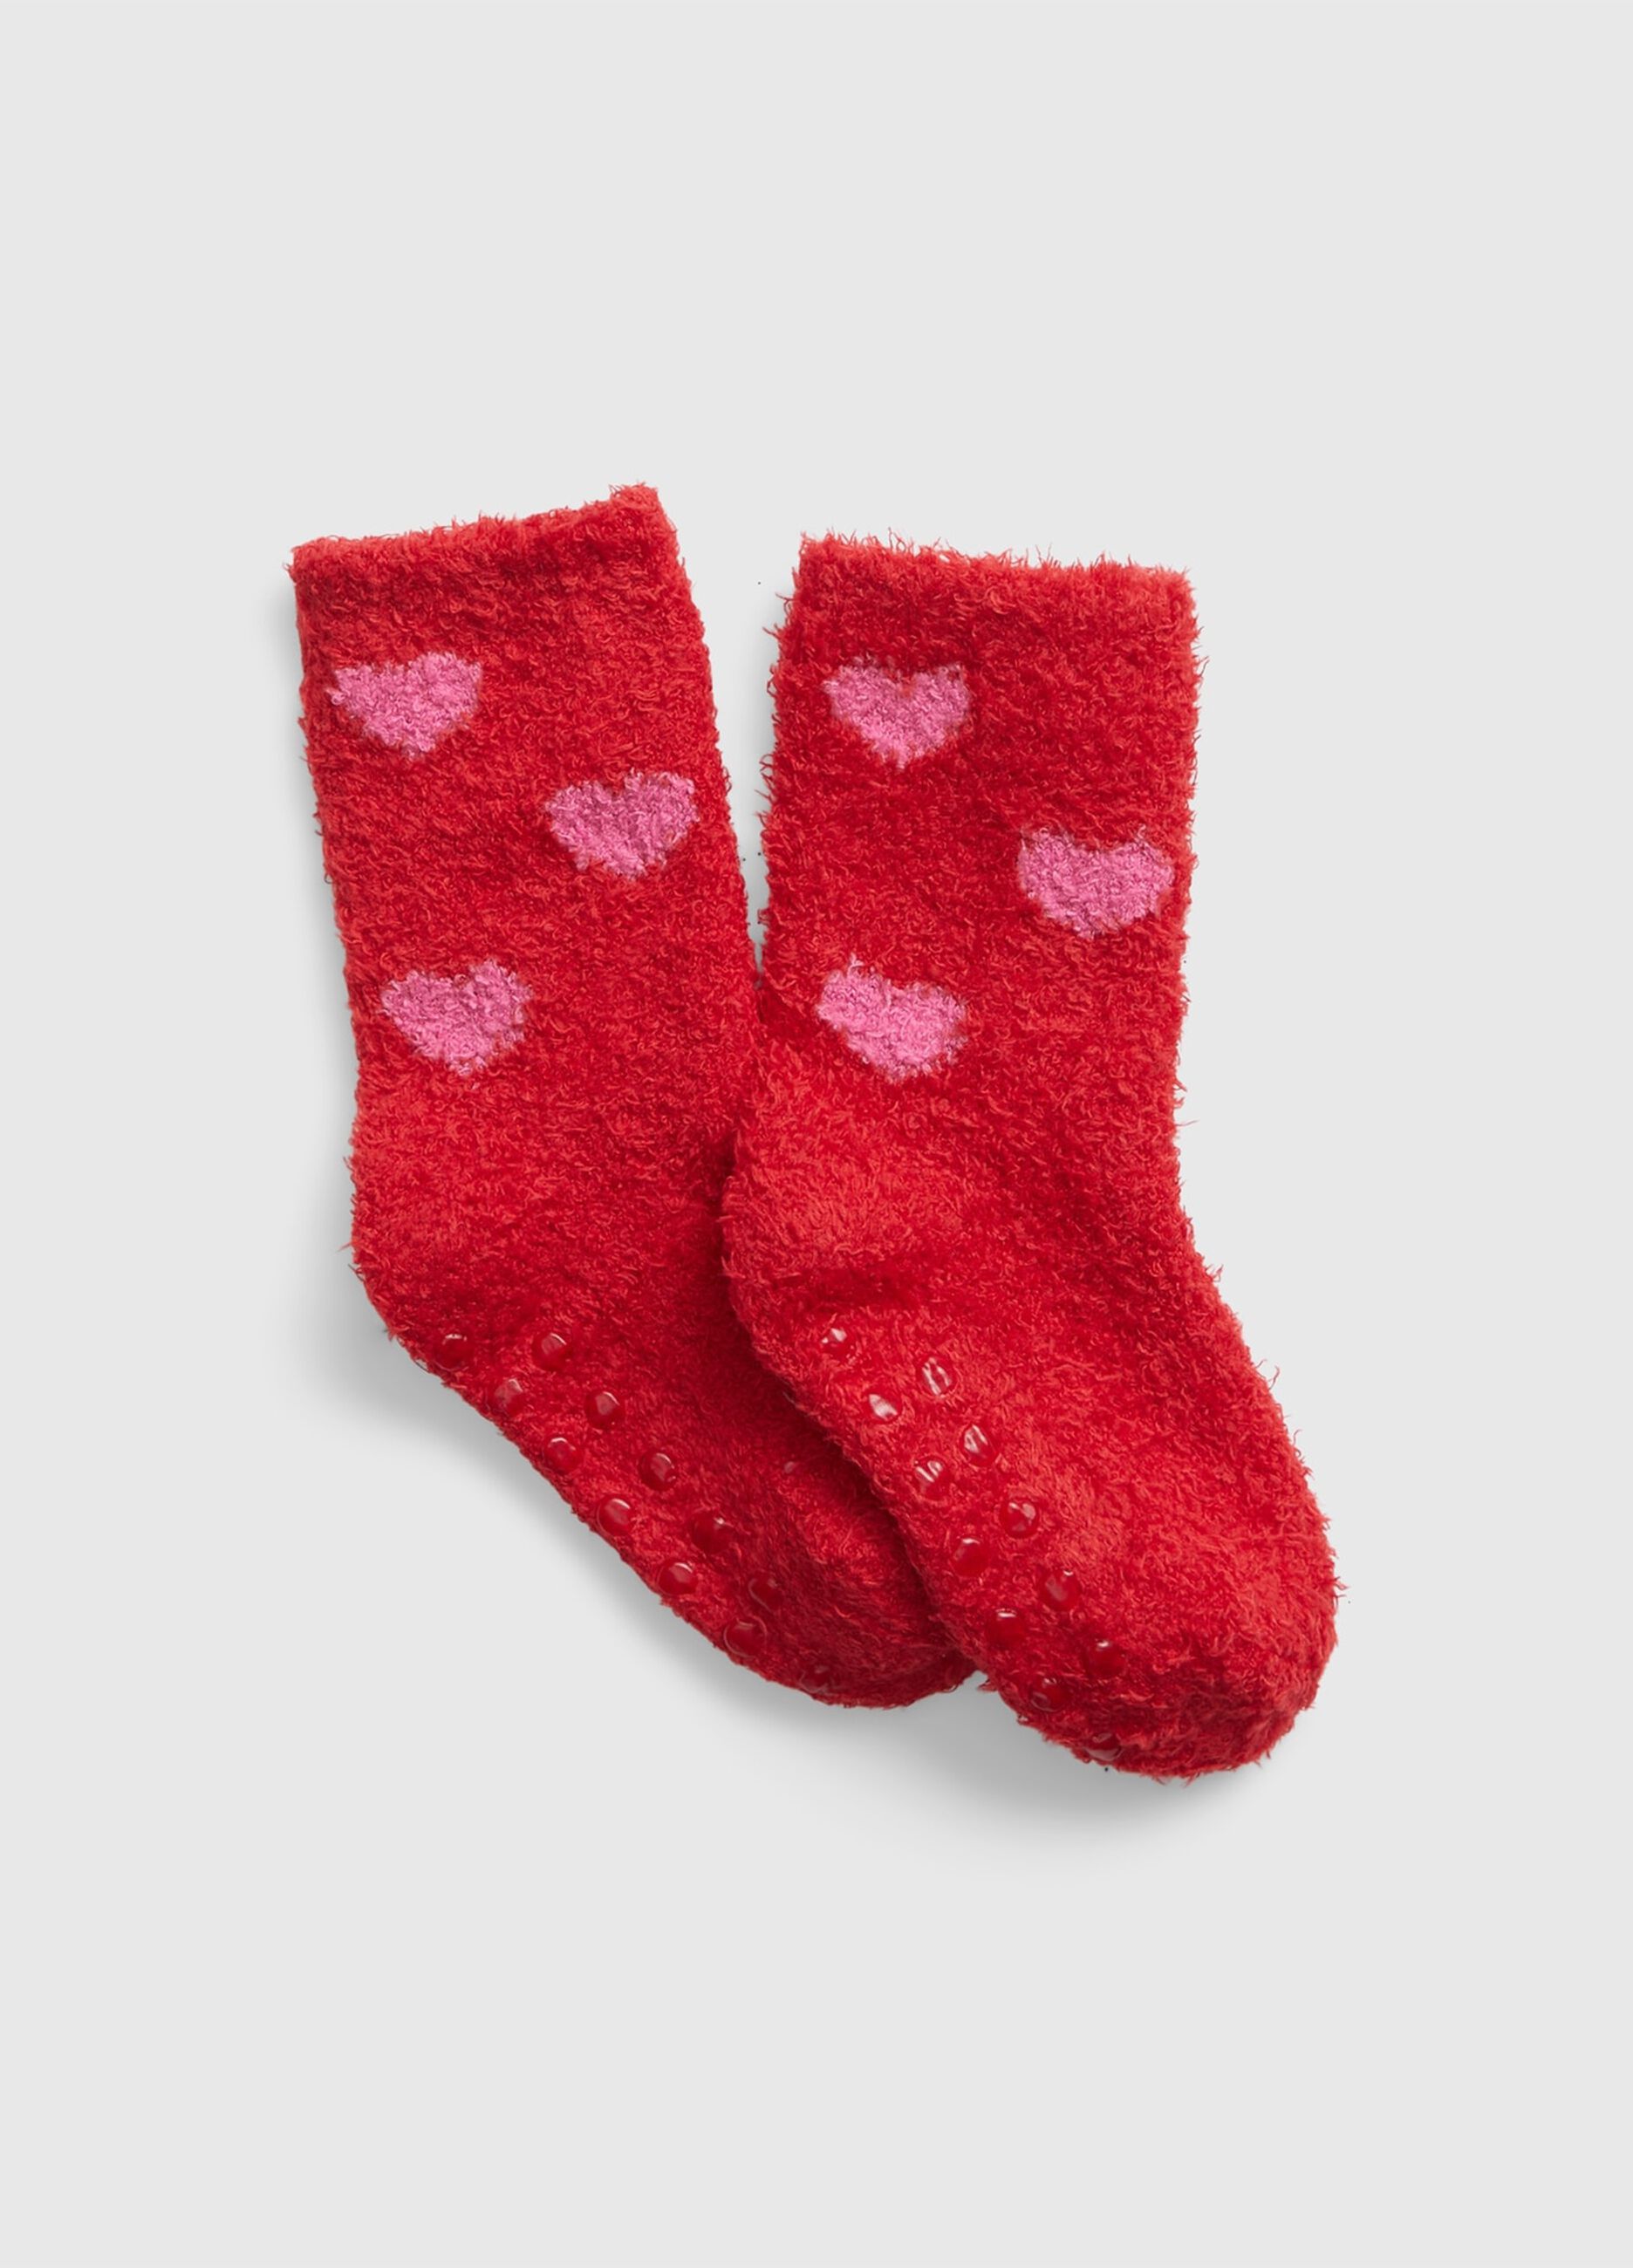 Slipper socks with hearts design